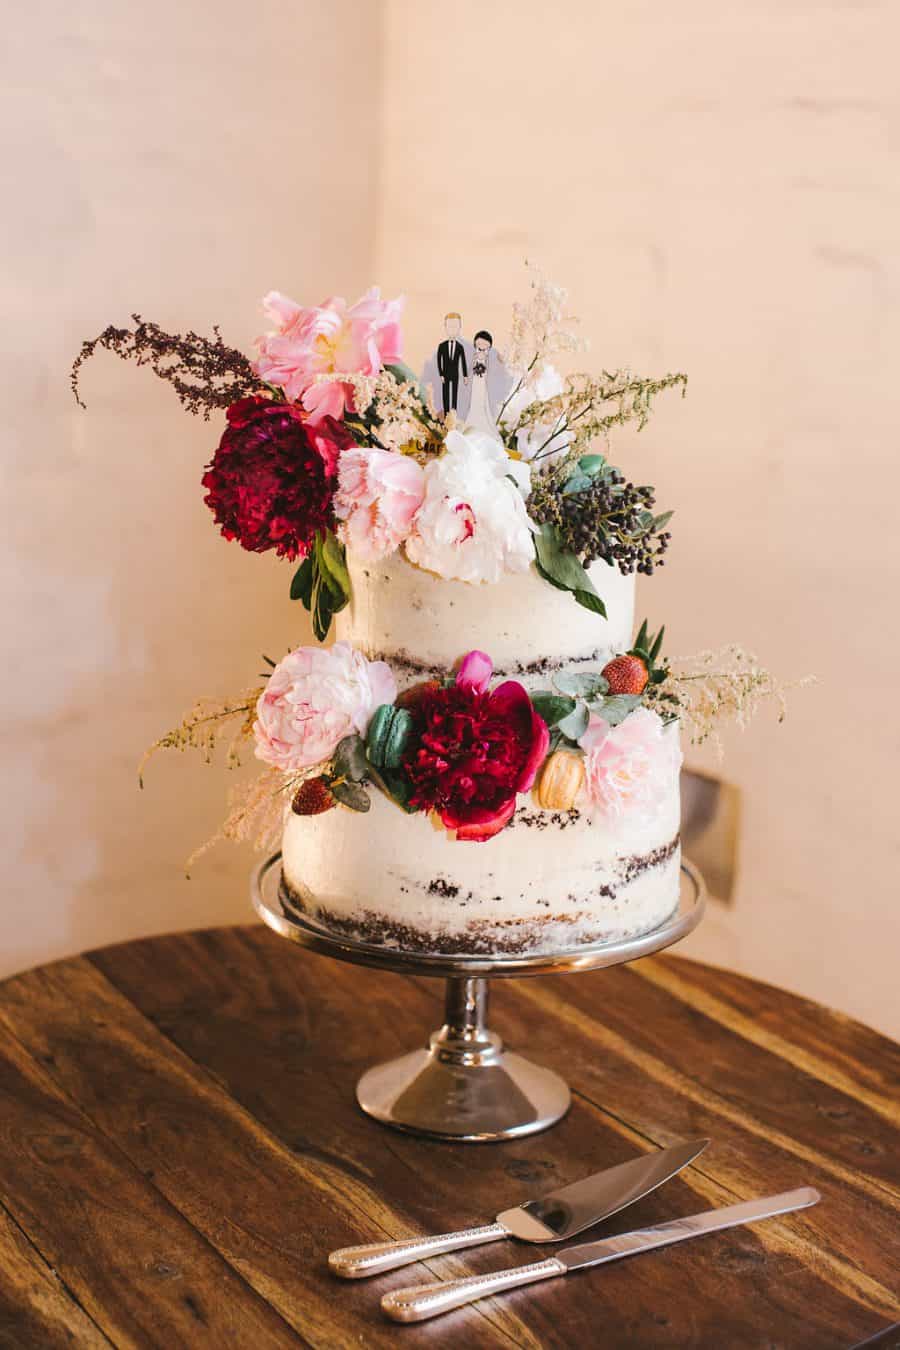 Best wedding cakes of 2016 - simple wedding cake with fresh flowers